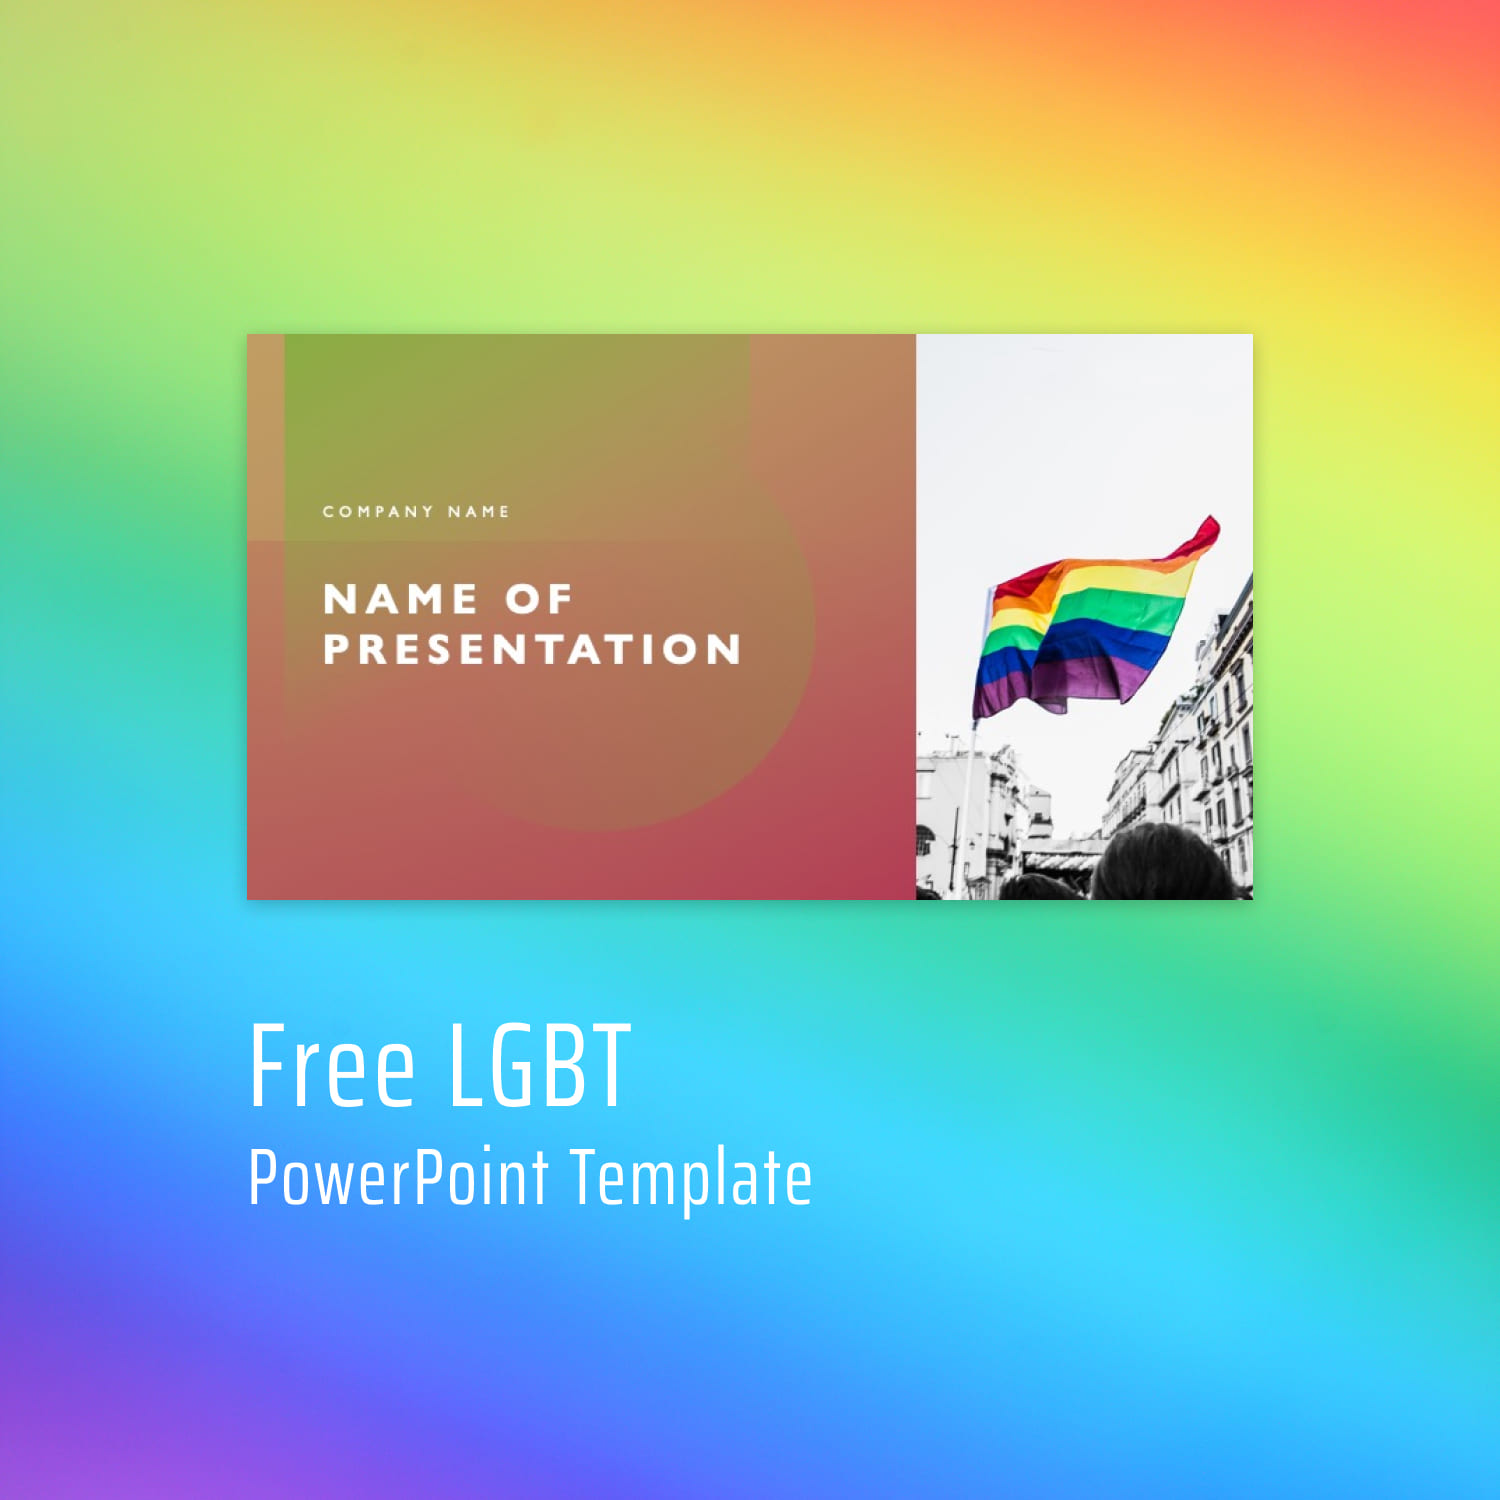 Free LGBT PowerPoint Template Lesbian Pride MasterBundles